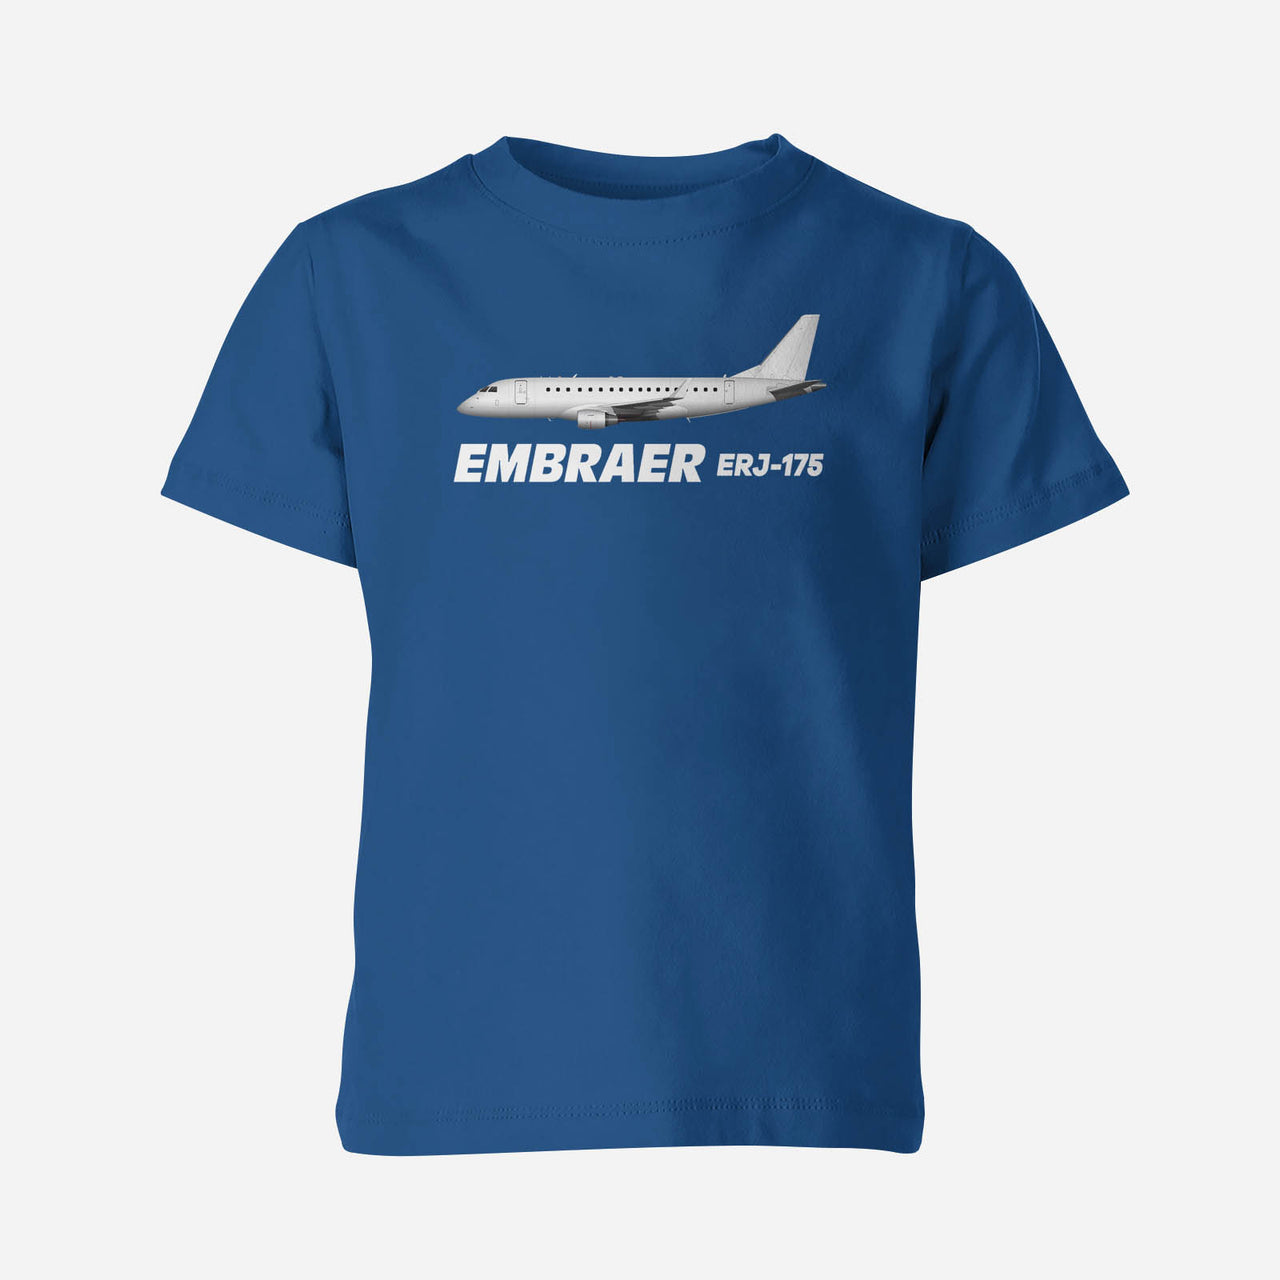 The Embraer ERJ-175 Designed Children T-Shirts